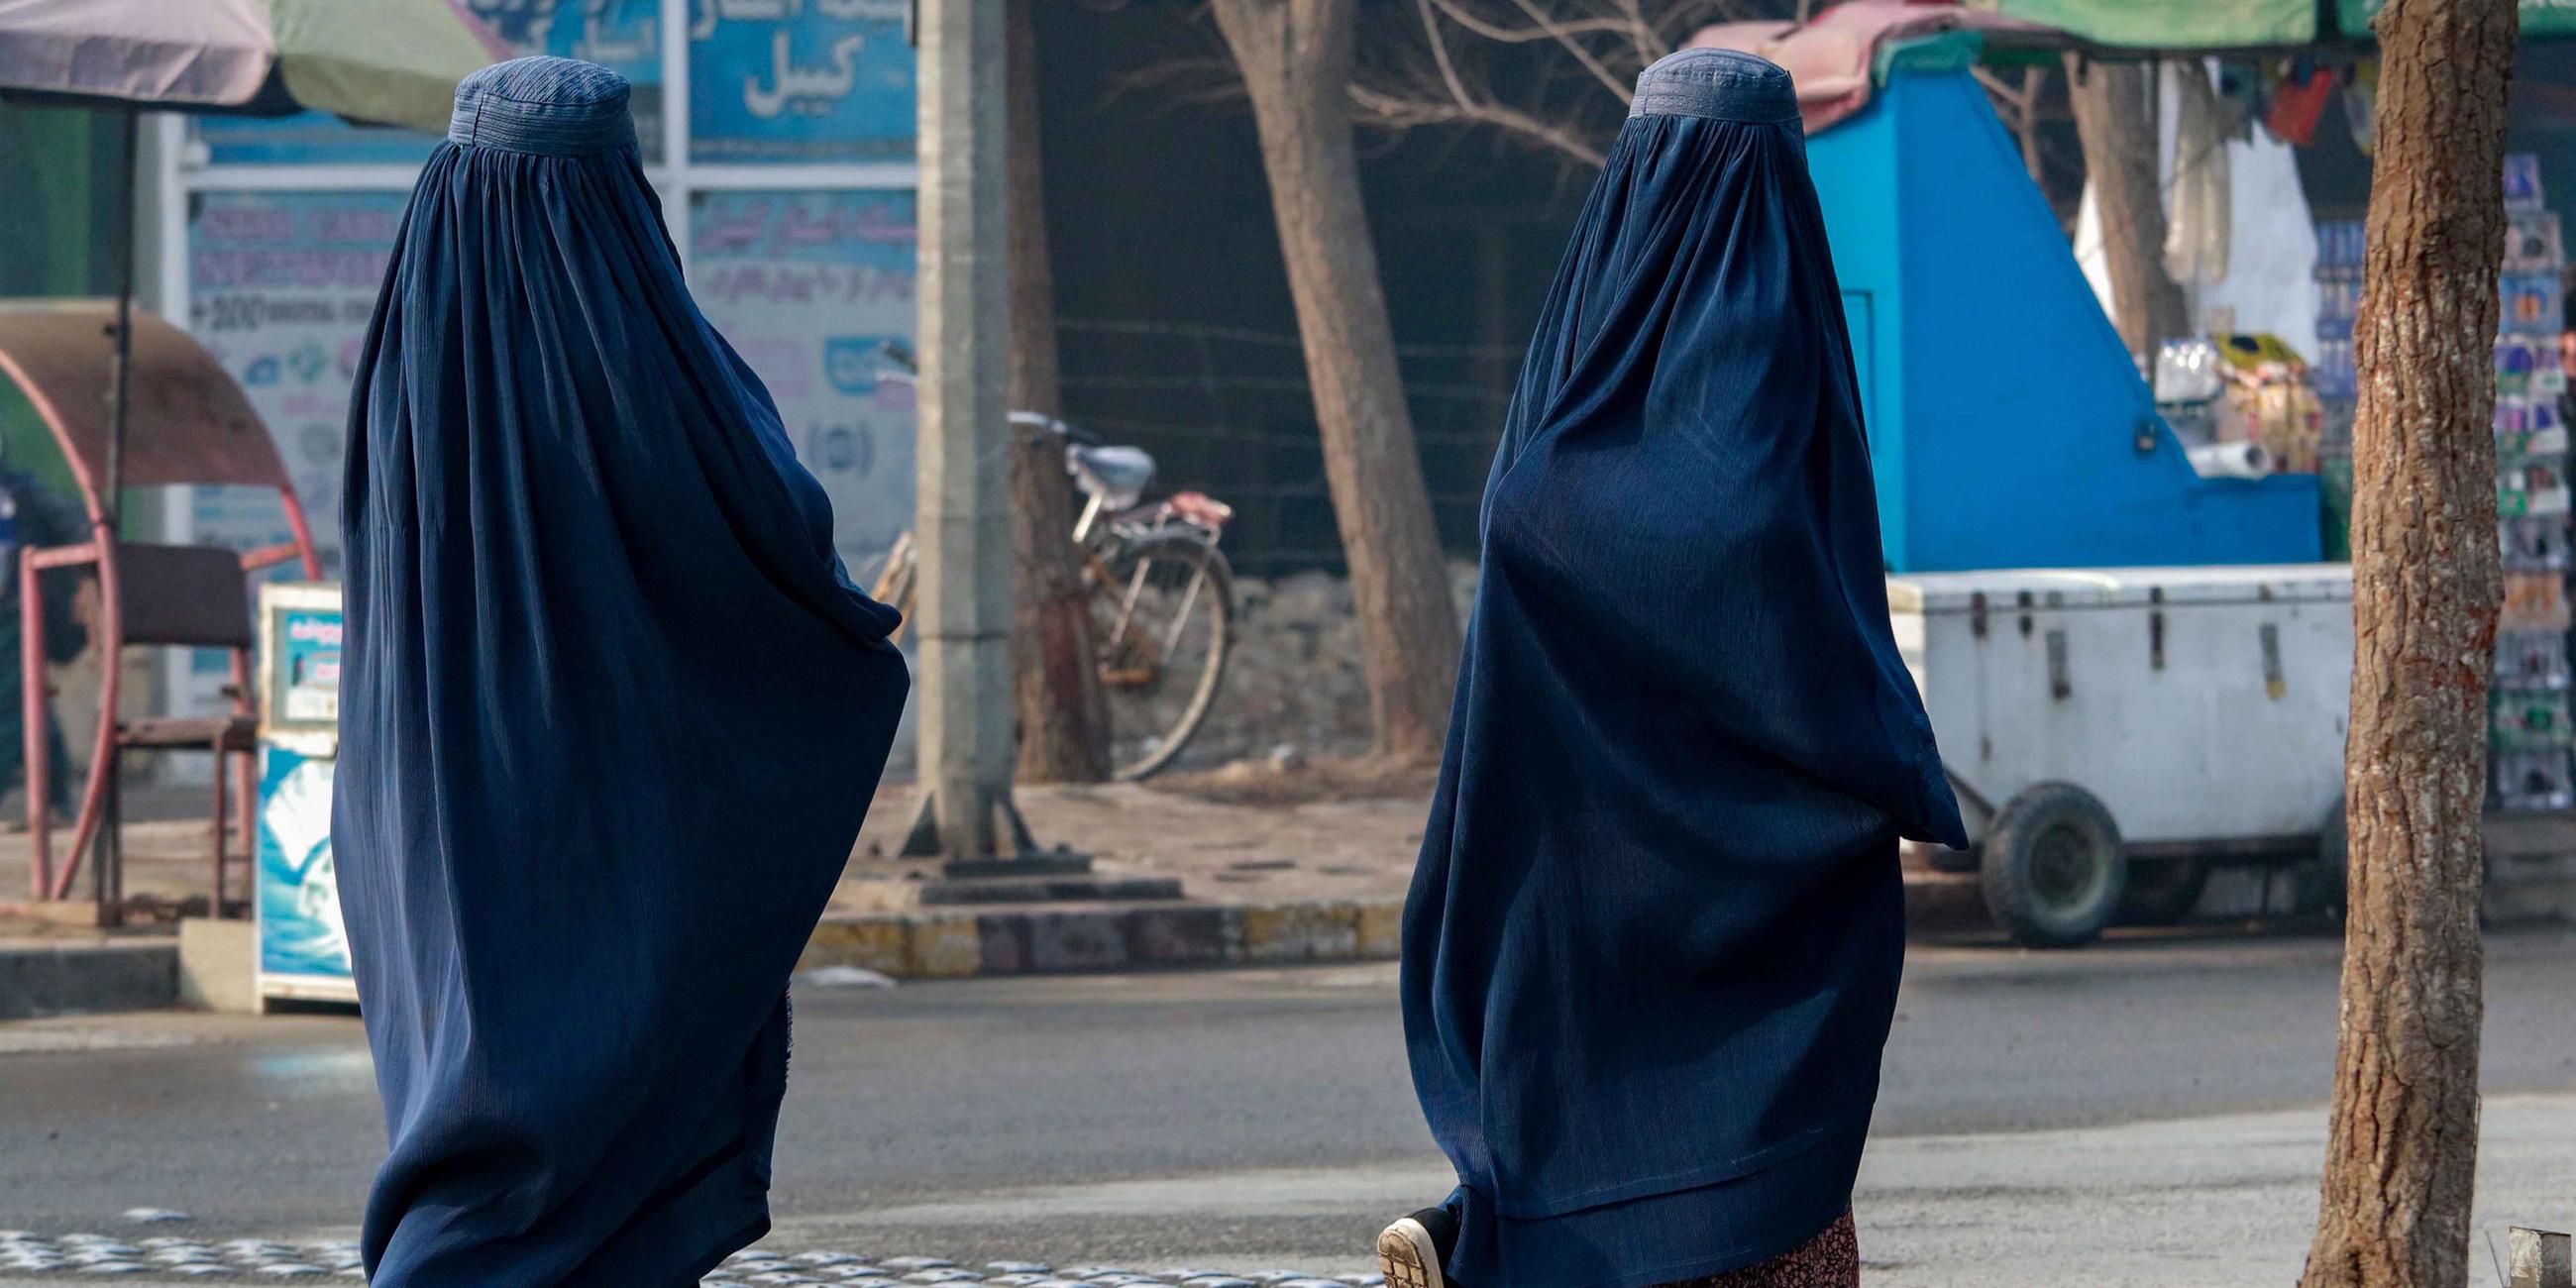 Afghanische Frauen in Burka am 7.5.2022 in Kabul